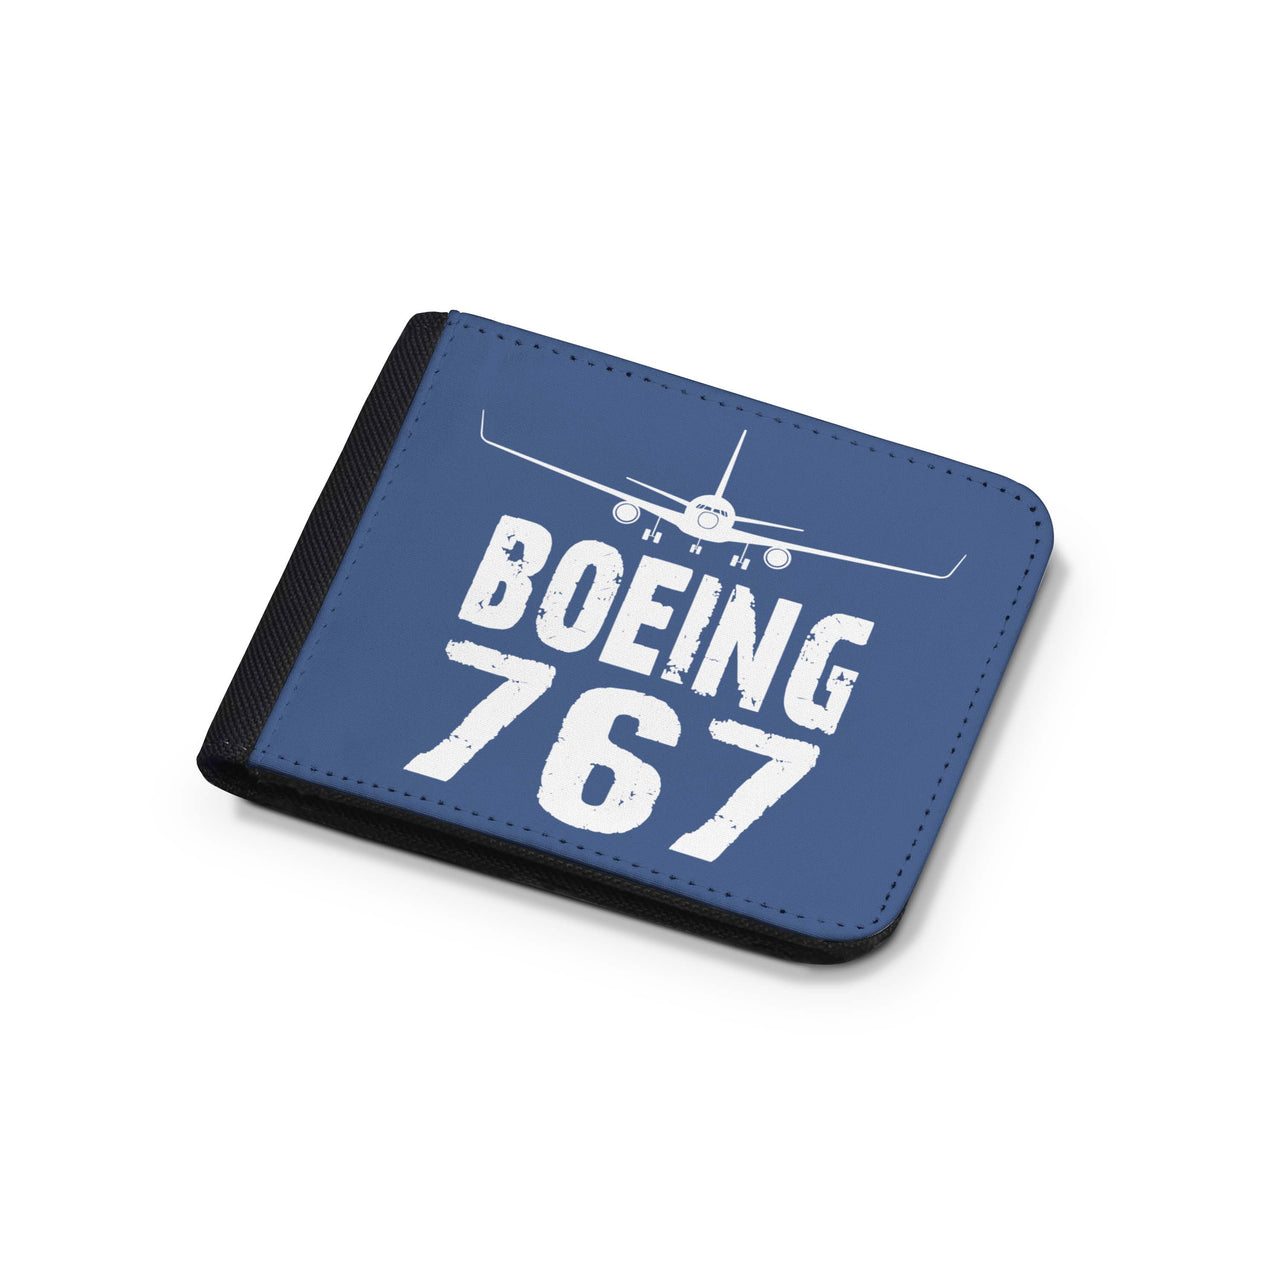 Boeing 767 & Plane Designed Wallets